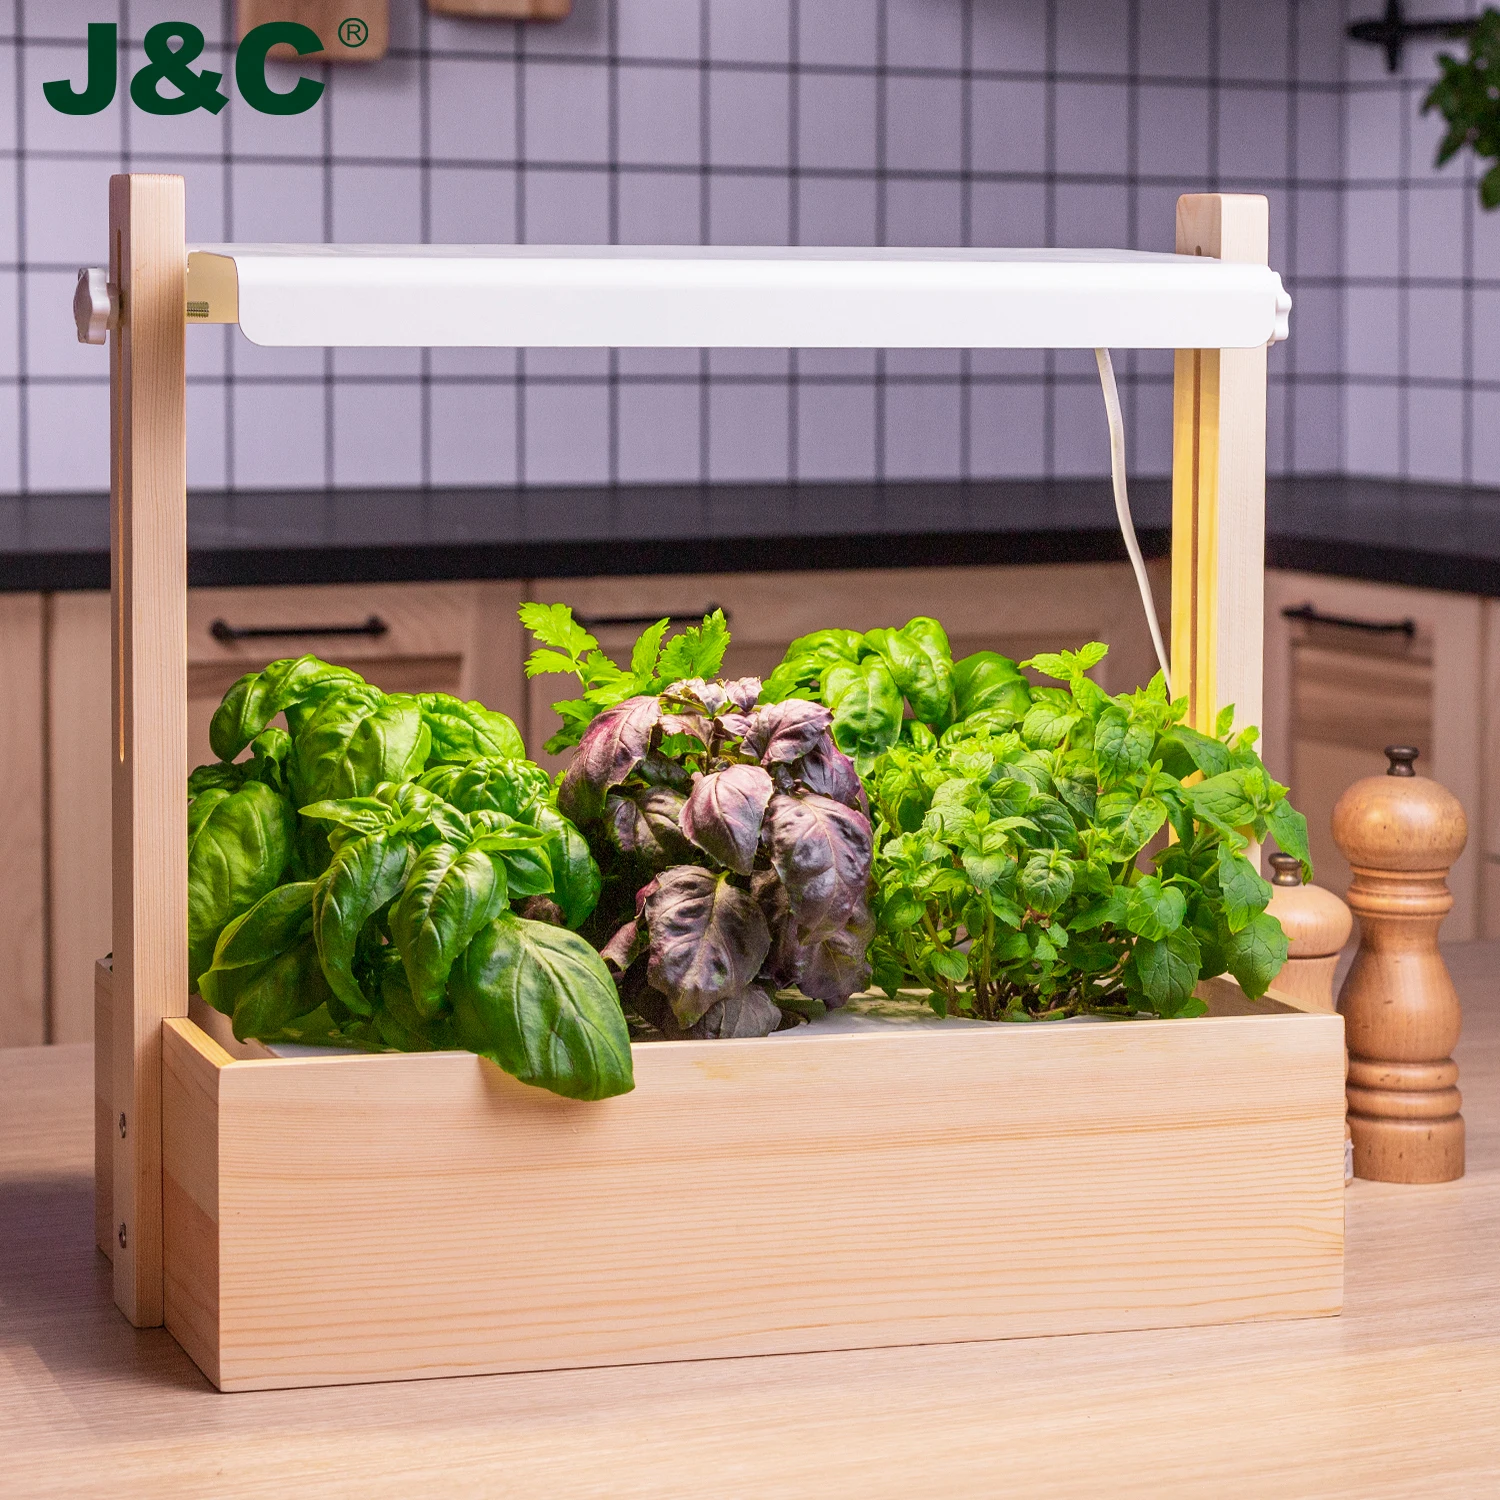 

J&C Minigarden indoor hydroponic growing system herb garden kit led grow light height adjustable, Wooden